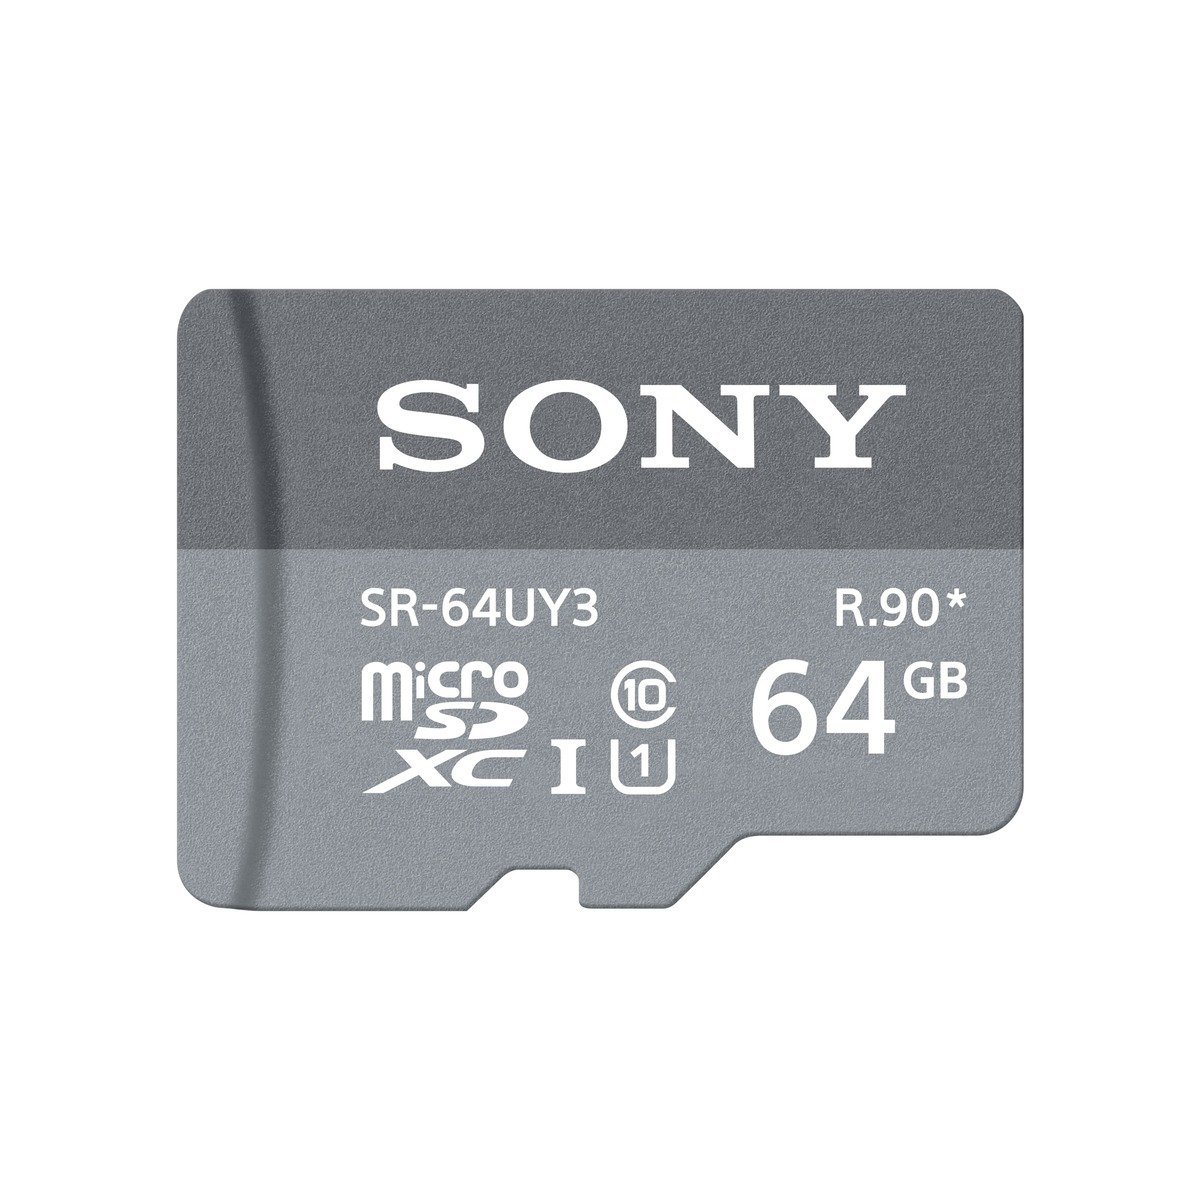 Купить карту памяти на 64 гб. Карта памяти Sony MICROSD 32 GB. Микро SD HC 1 Sony. SD 128 Sony. Sony MICROSD class10 UHS-I 128gb SR-g1uy3at SR-g1uy3at.